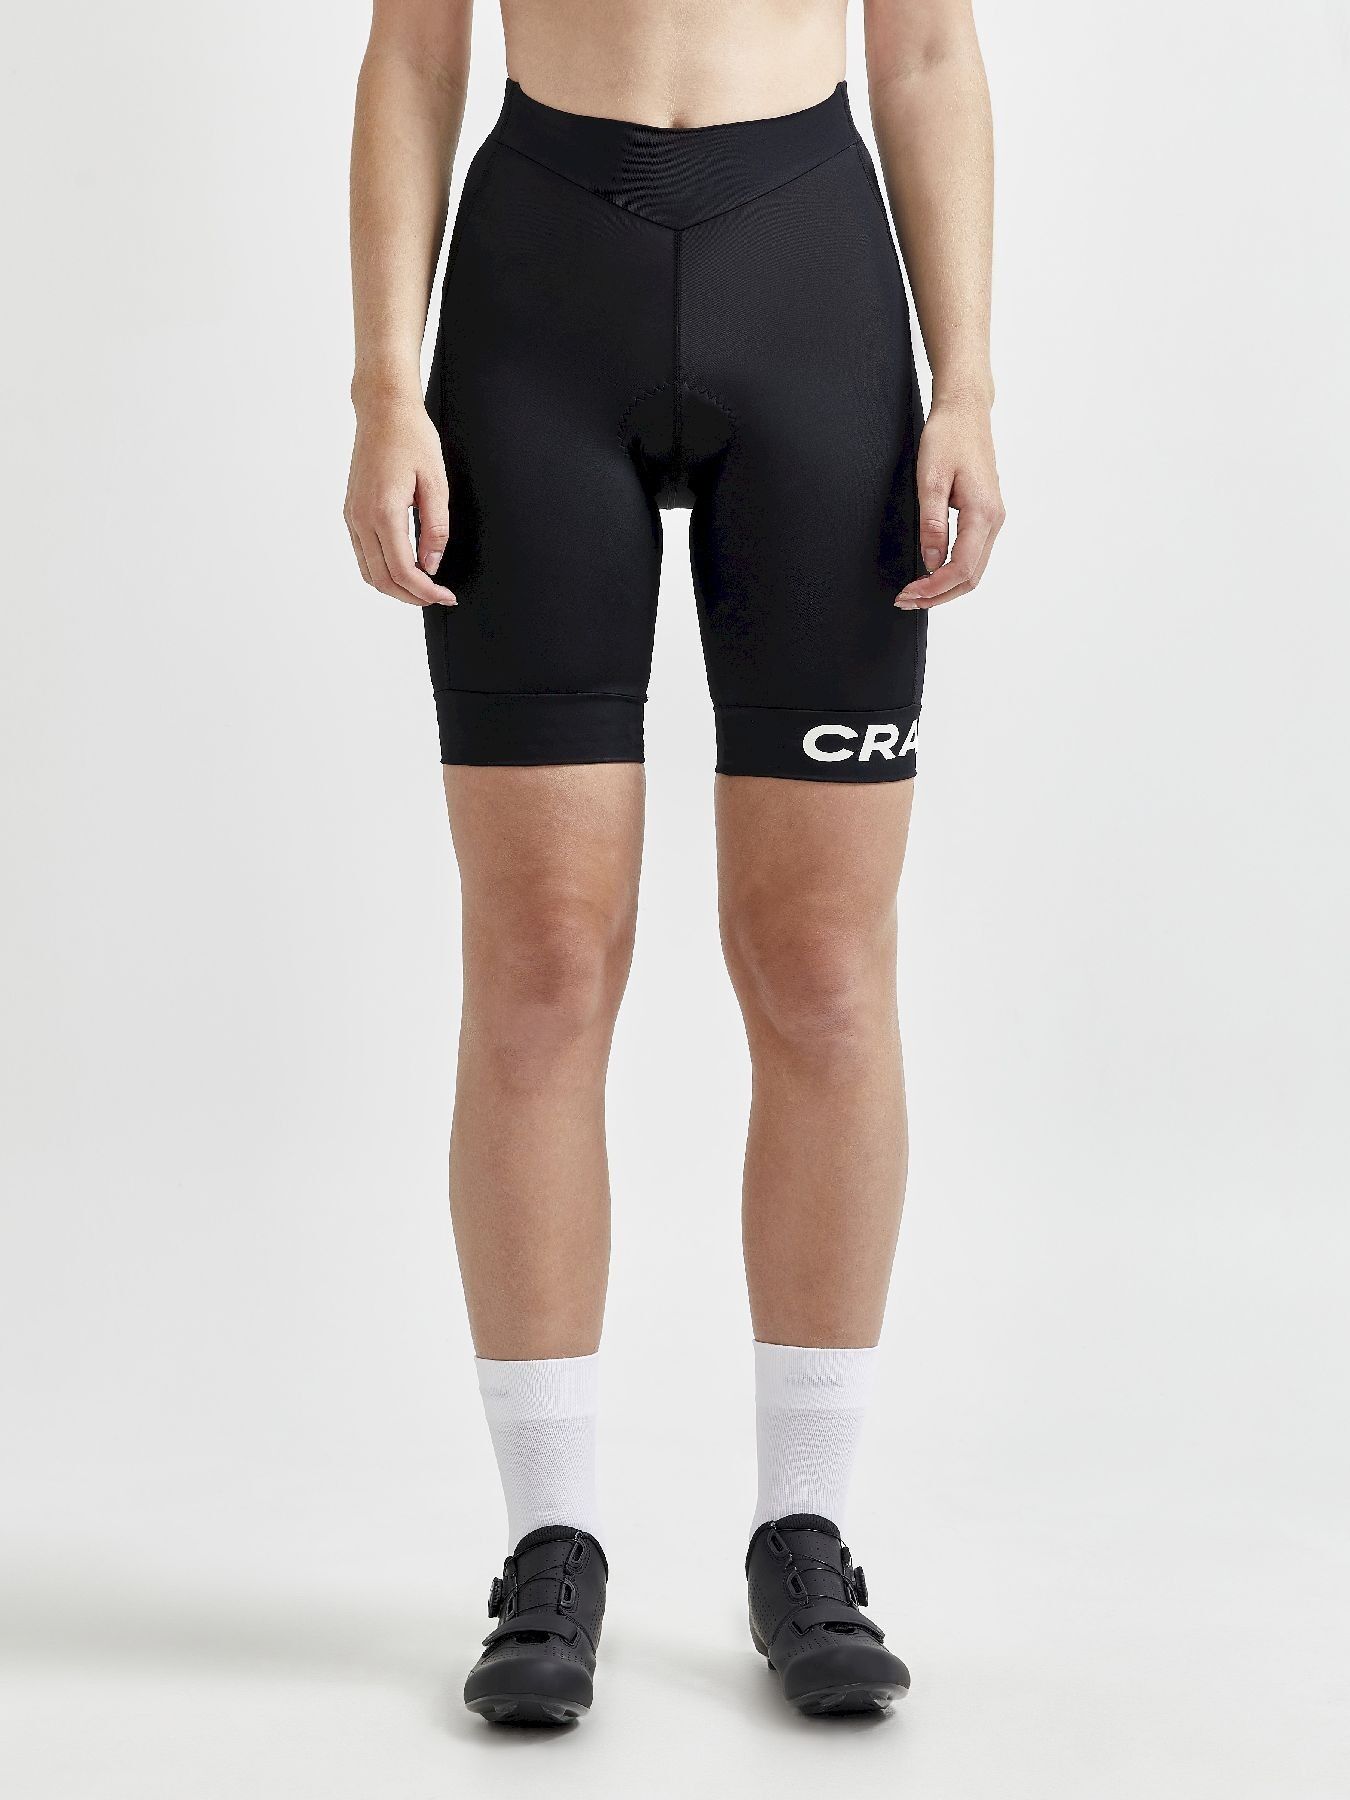 Craft Core Endurance Shorts - Culottes de ciclismo - Mujer